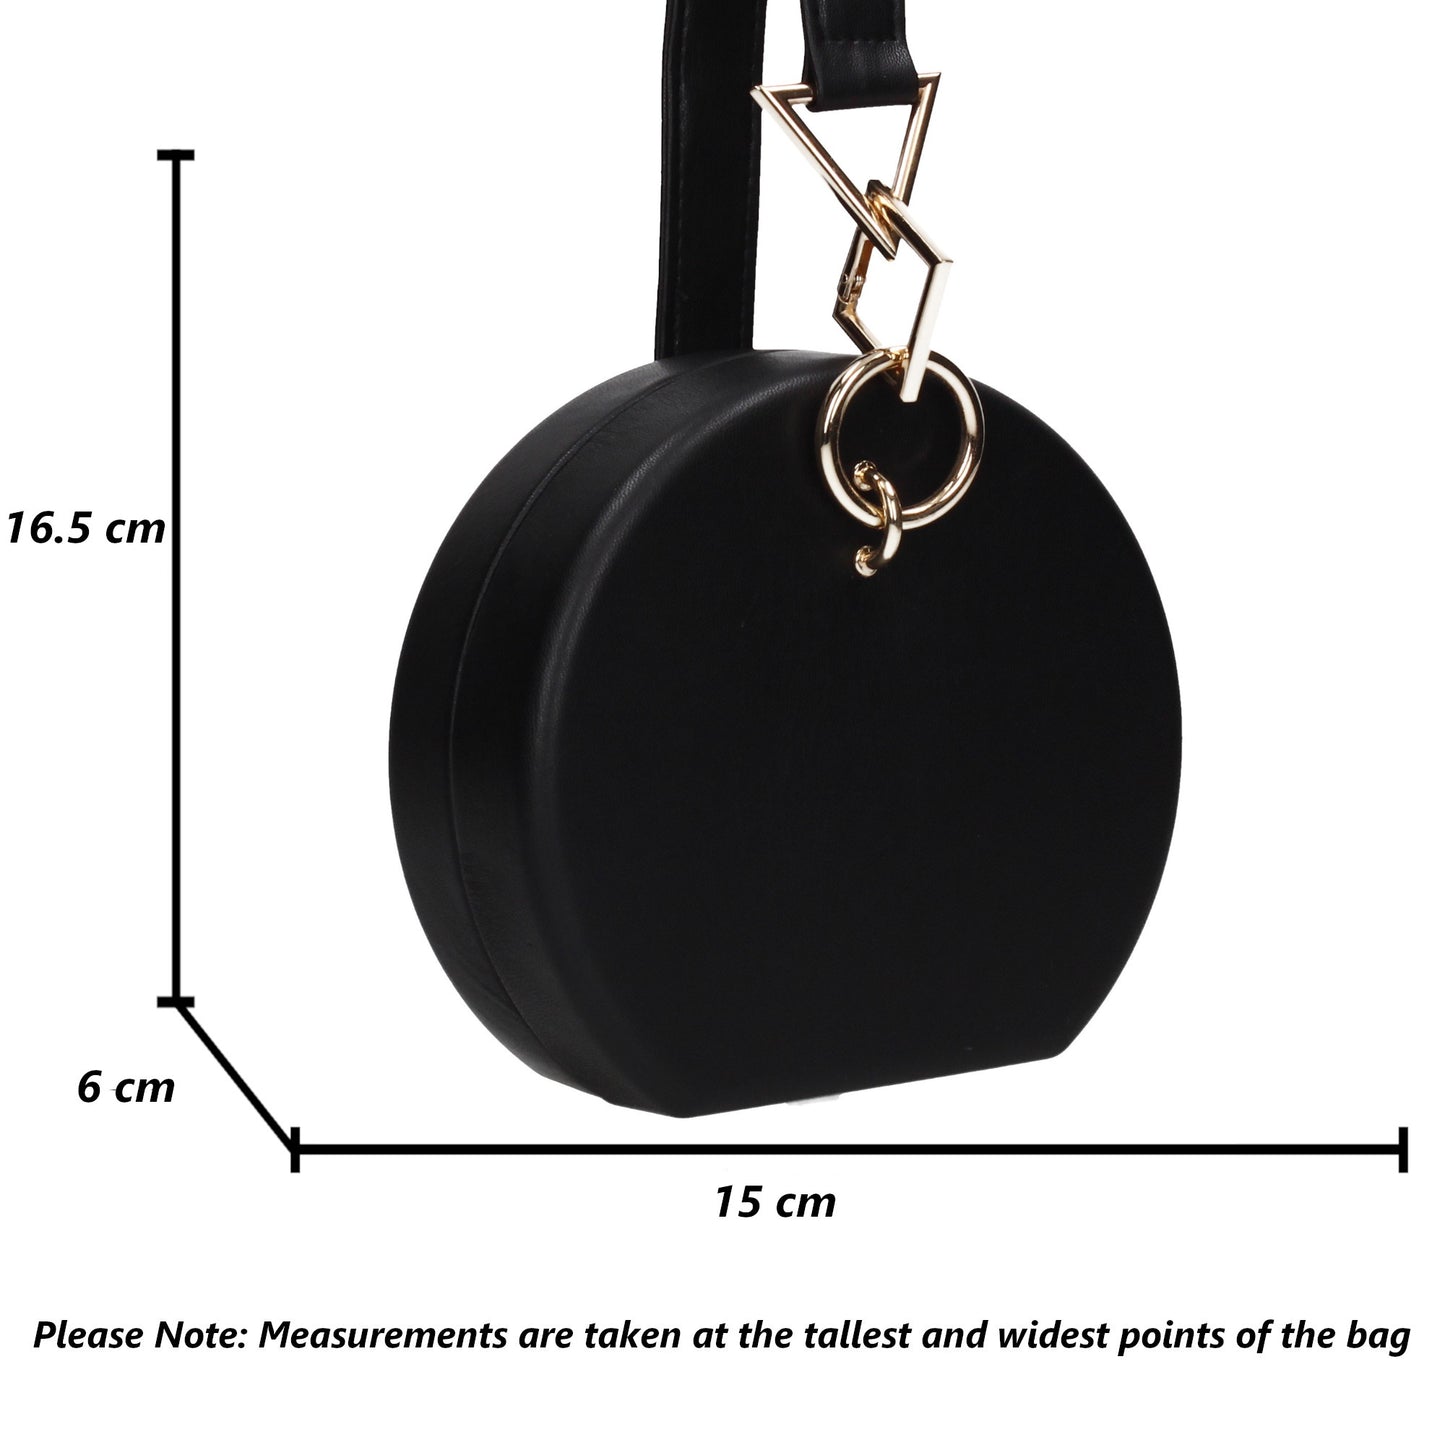 Rayne Circular Style Faux Leather Clutch Bag Black